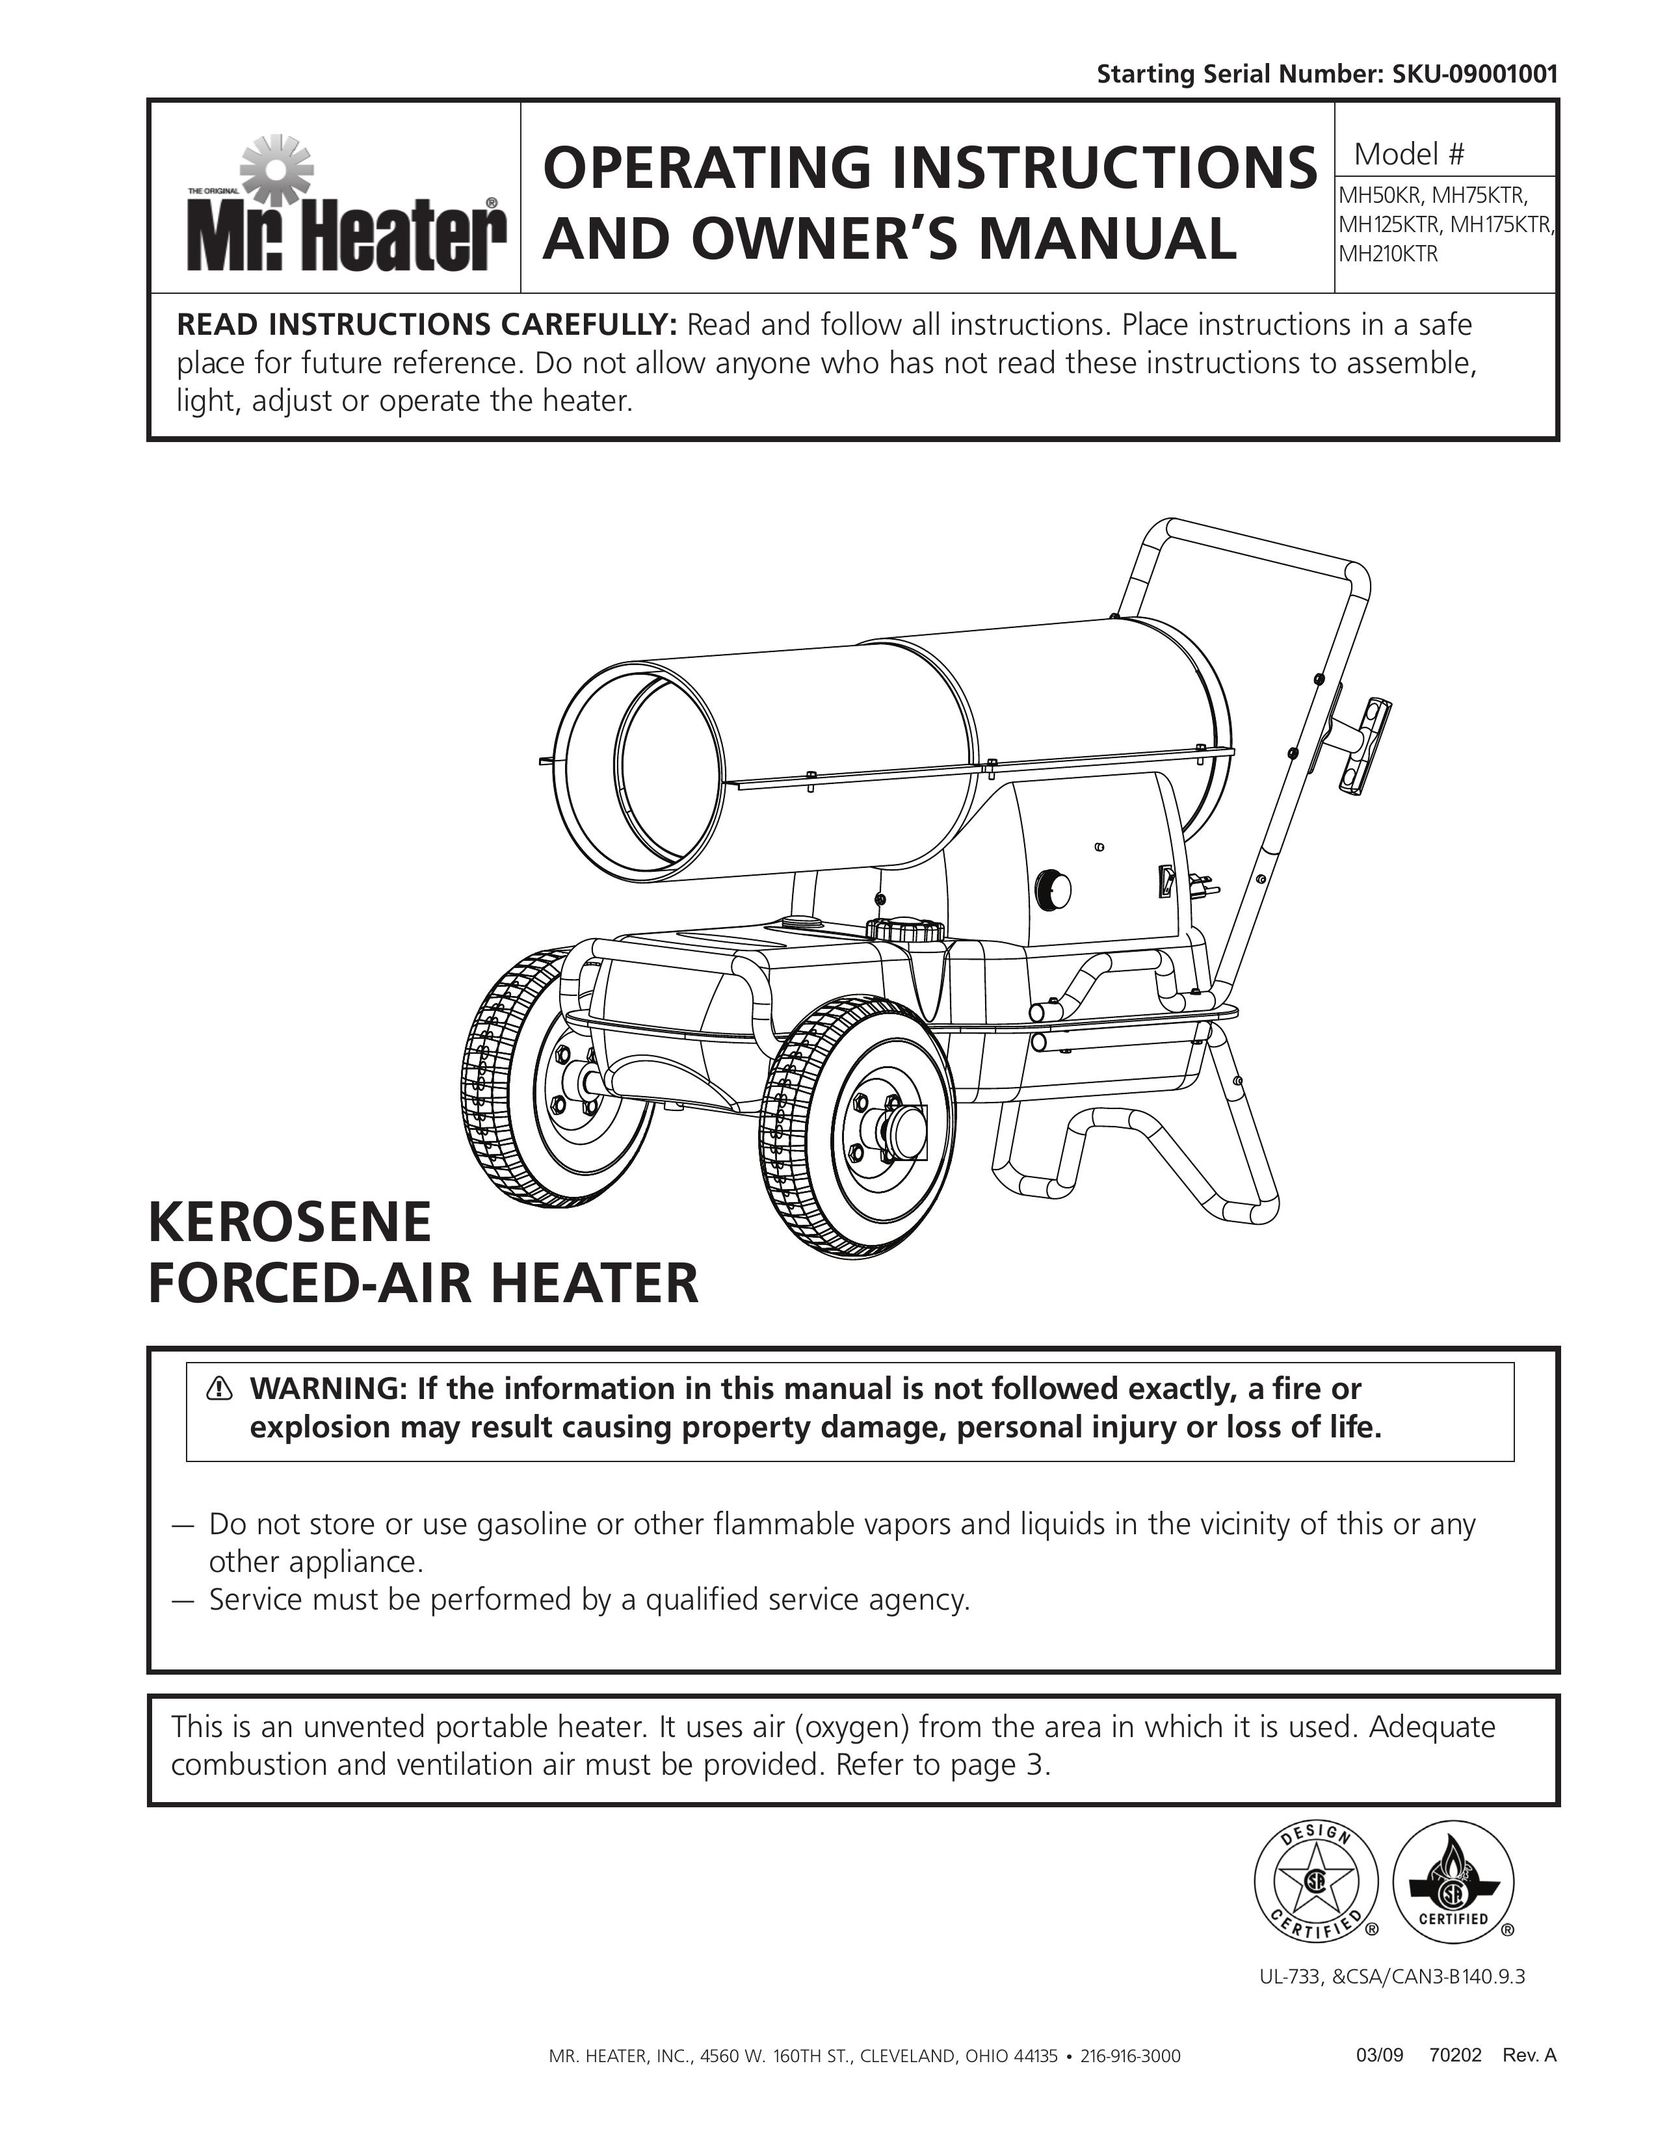 Mr. Heater MH210KTR Gas Heater User Manual